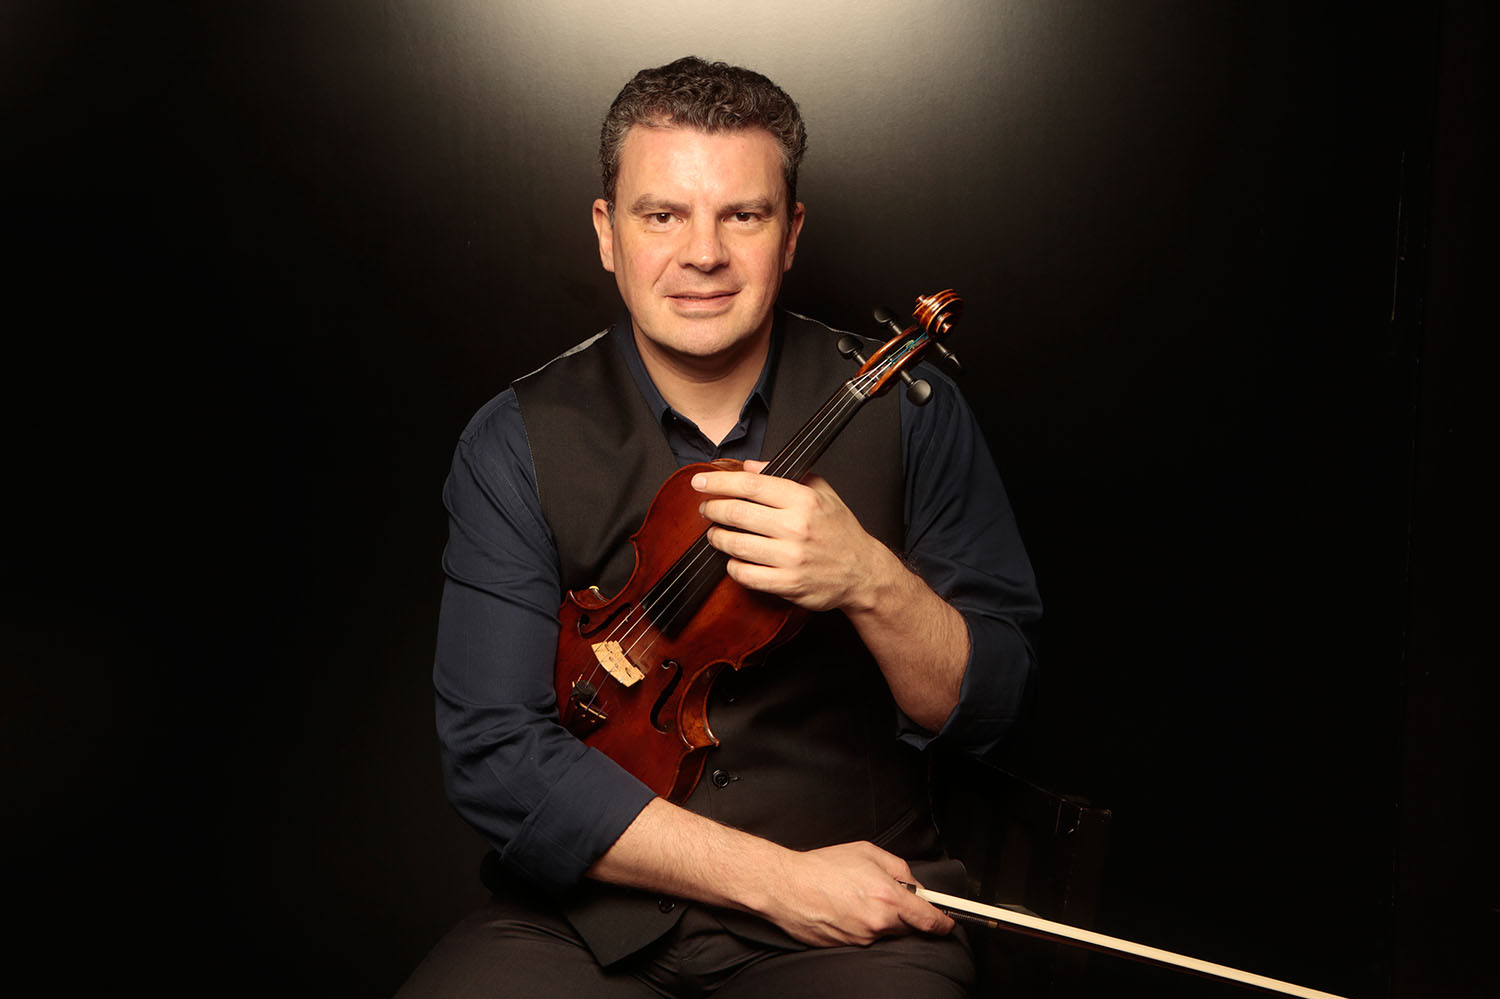 Maestro e violinista, Baldini venceu o primeiro concurso internacional aos 12 anos 